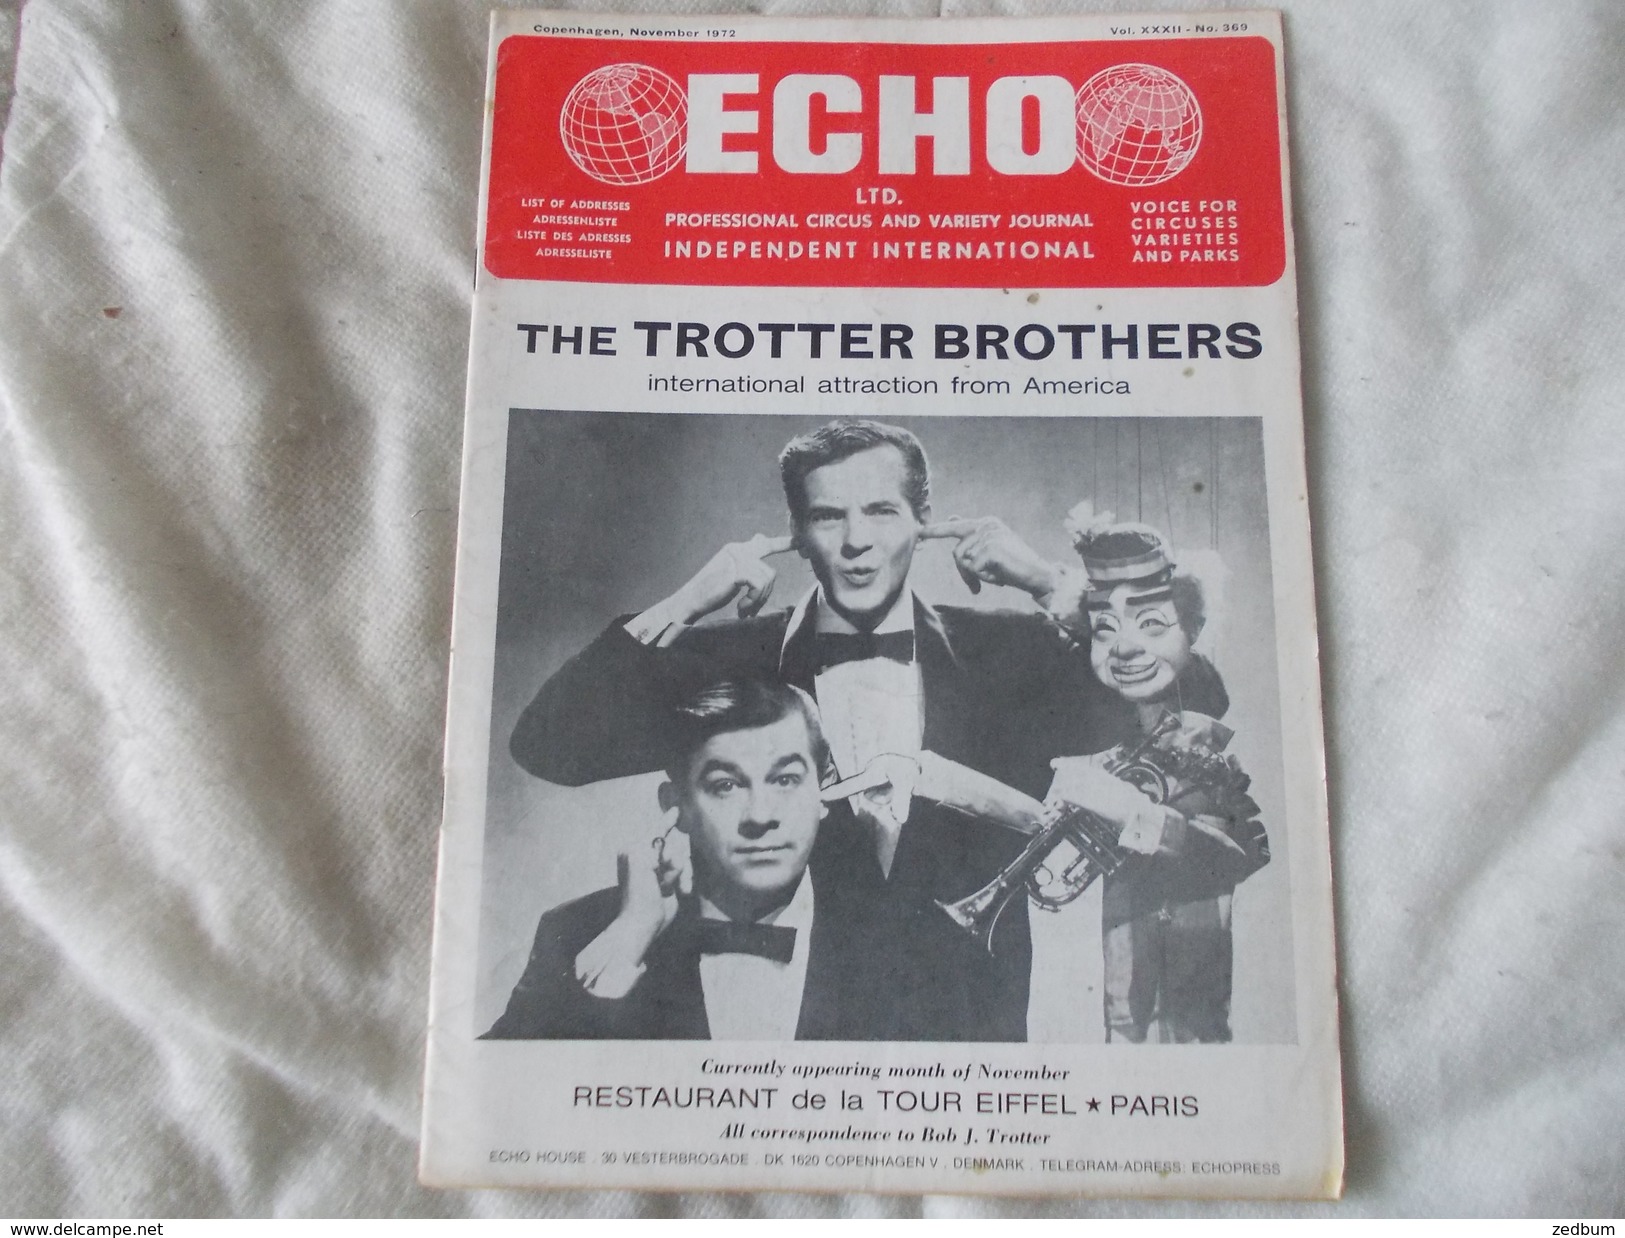 ECHO LTD Professional Circus And Variety Journal Independent International N° 369 November 1972 - Divertissement